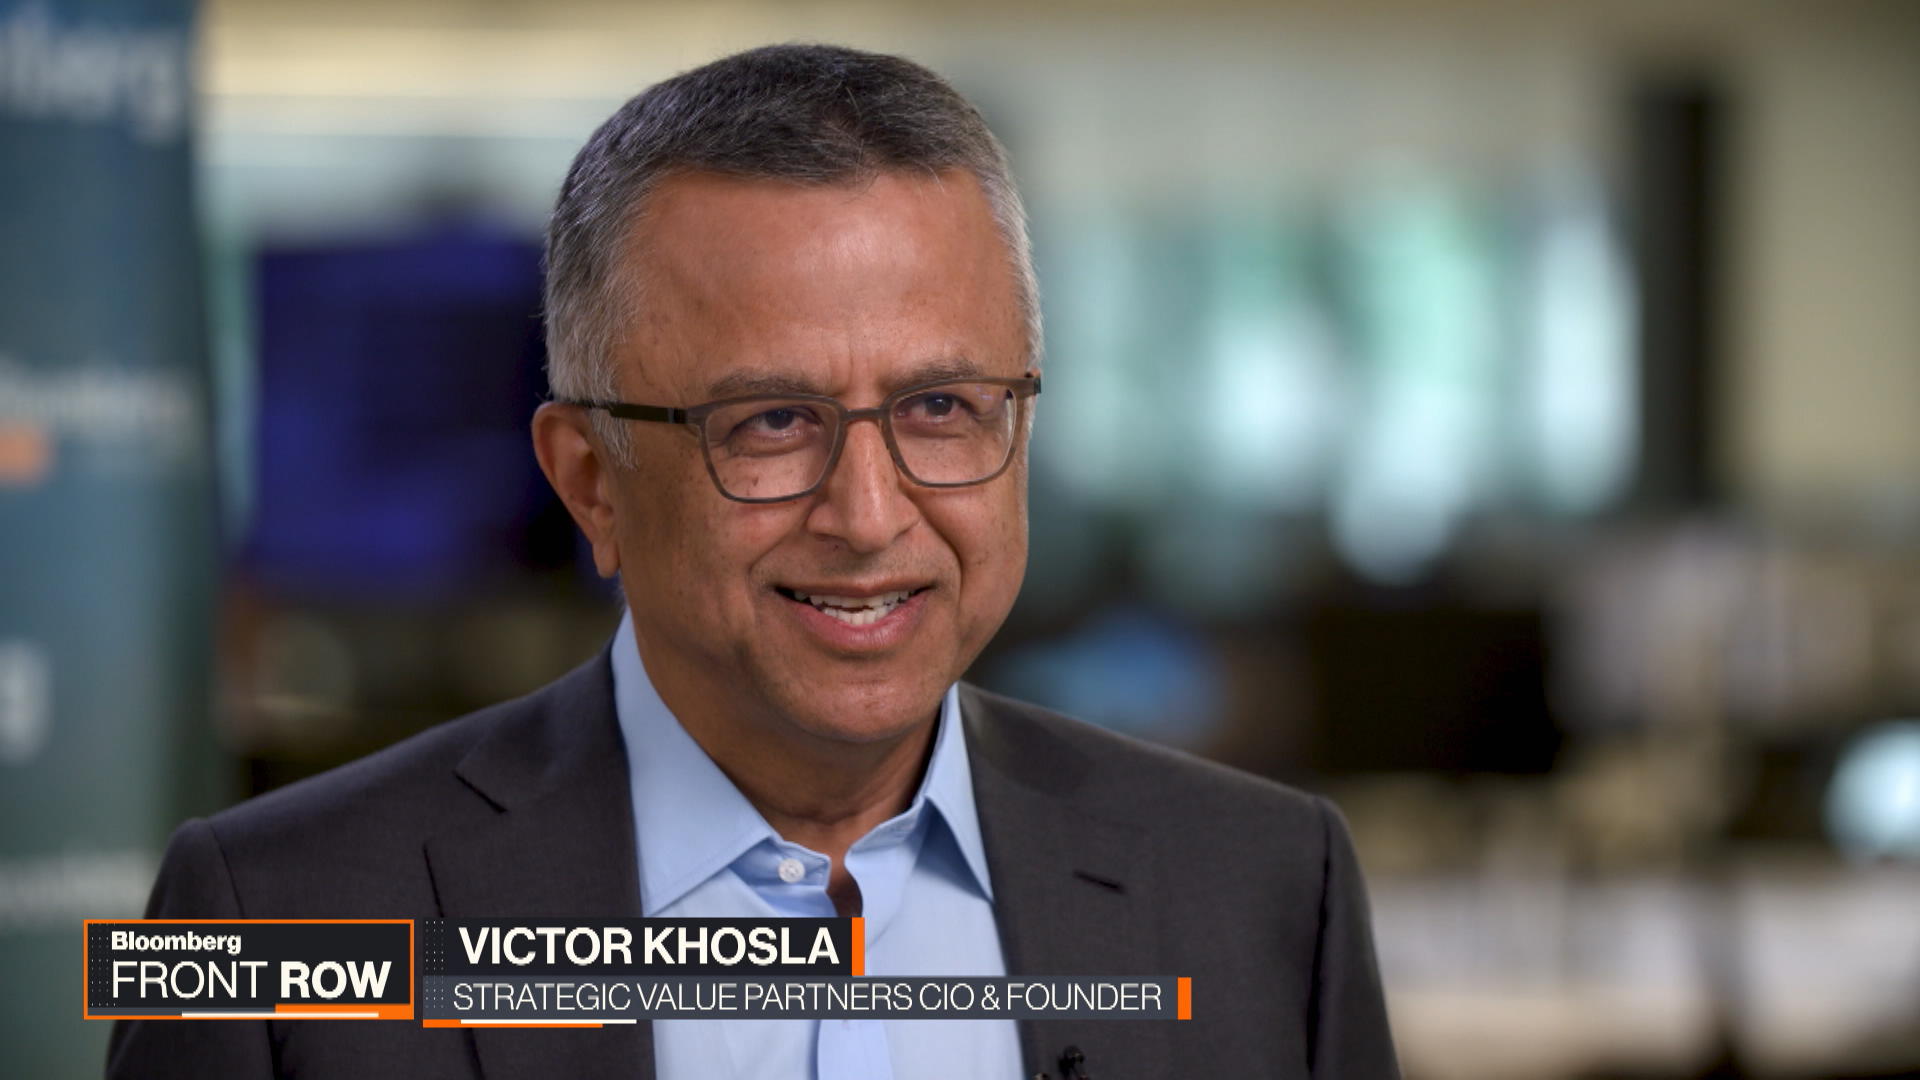 Watch How SVP's Khosla Built an 'Edge' in Distressed Debt - Bloomberg